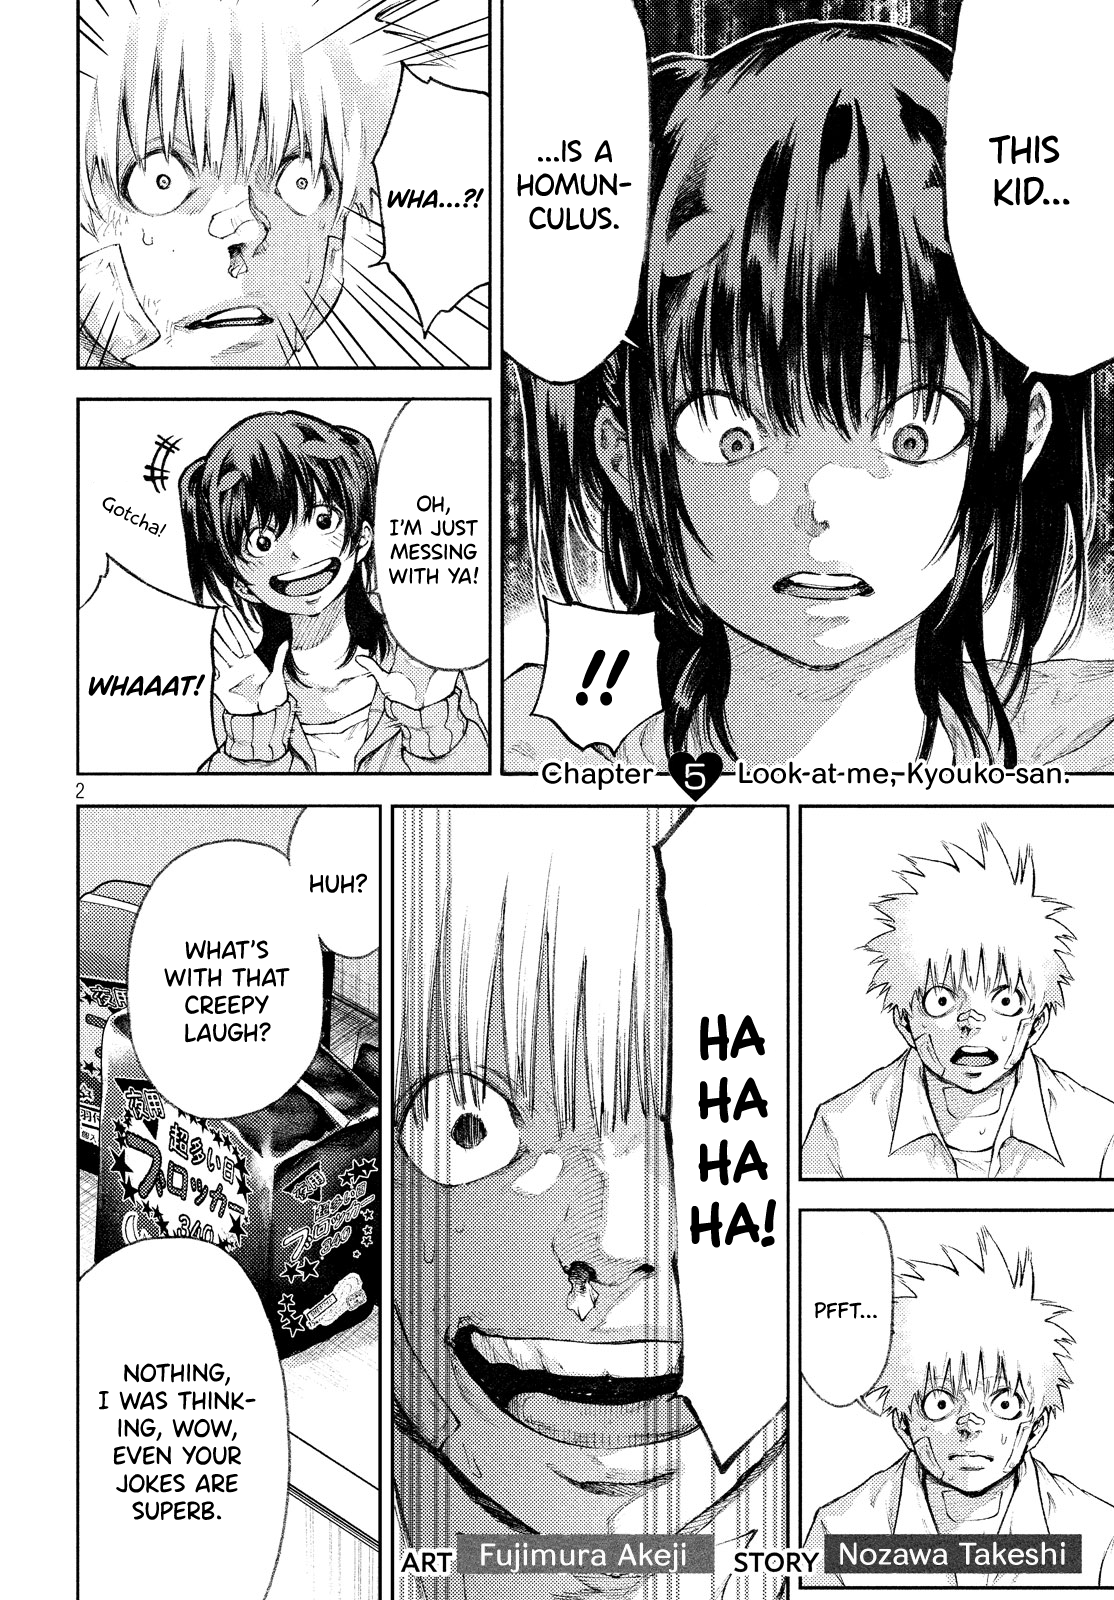 I Love You, Kyouko-San. - Page 2